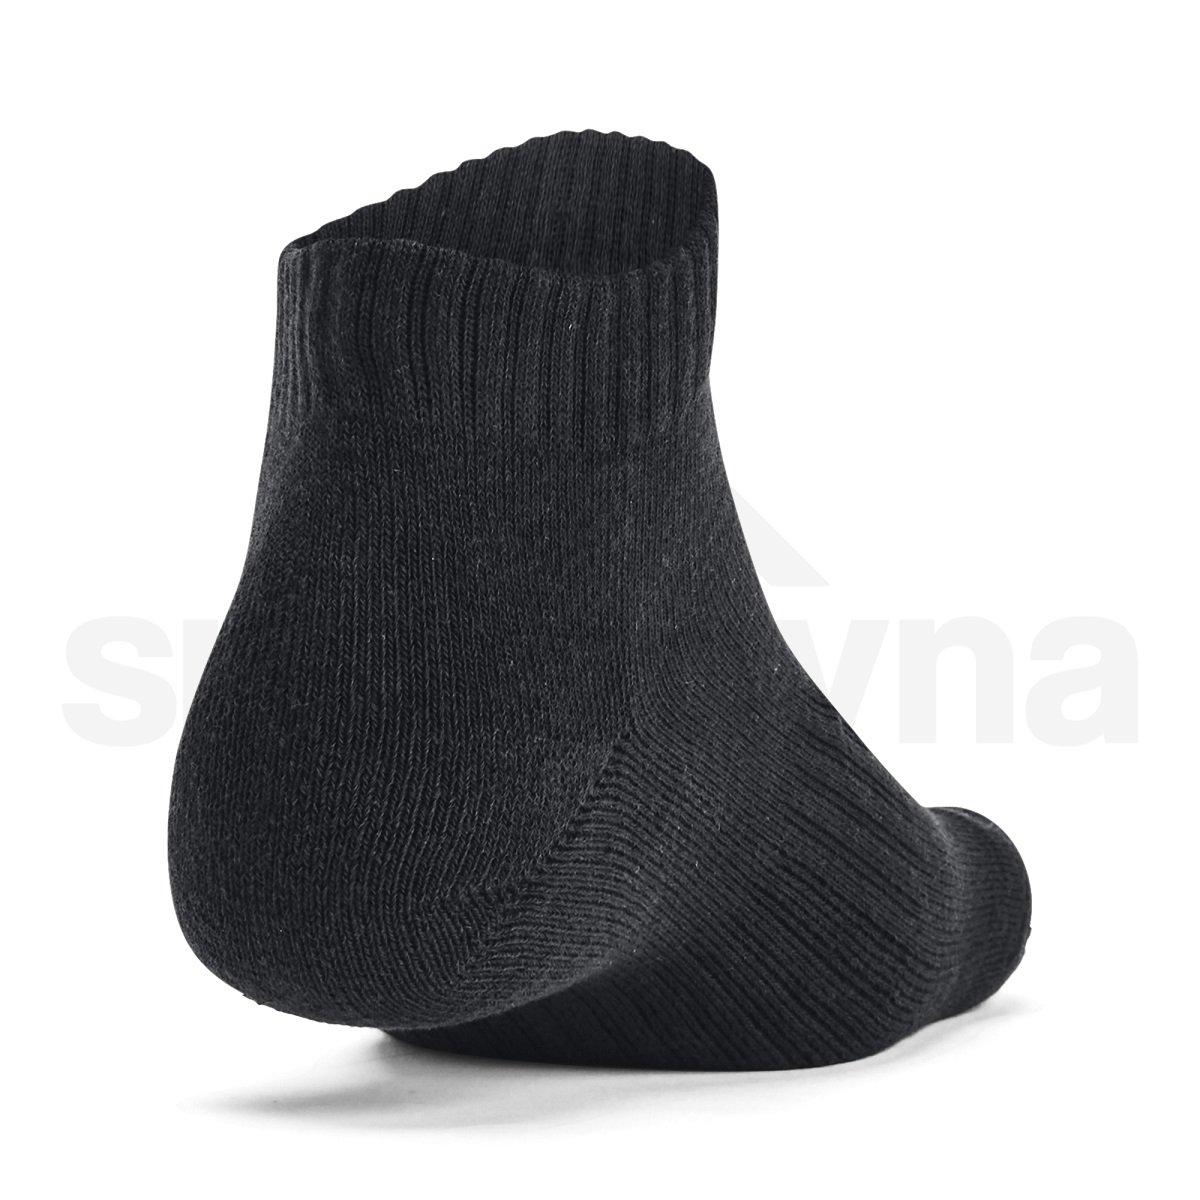 Ponožky Under Armour Core Low Cut 3Pk - bílá/šedá/černá